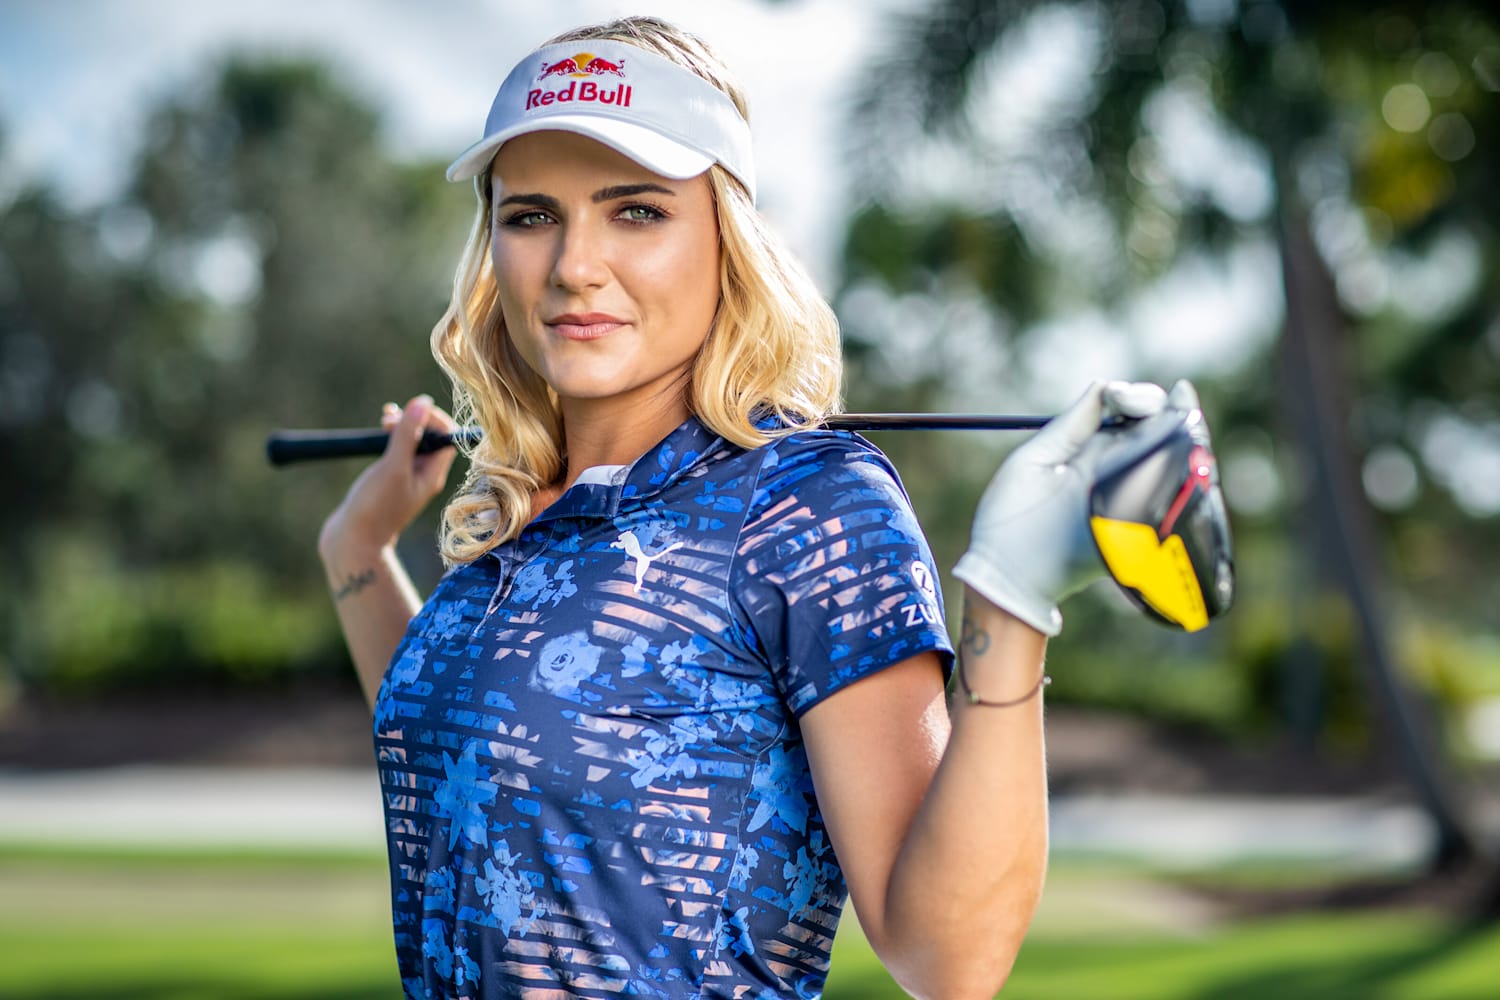 Lexi Thompson: Golf – Red Bull Athlete Profile